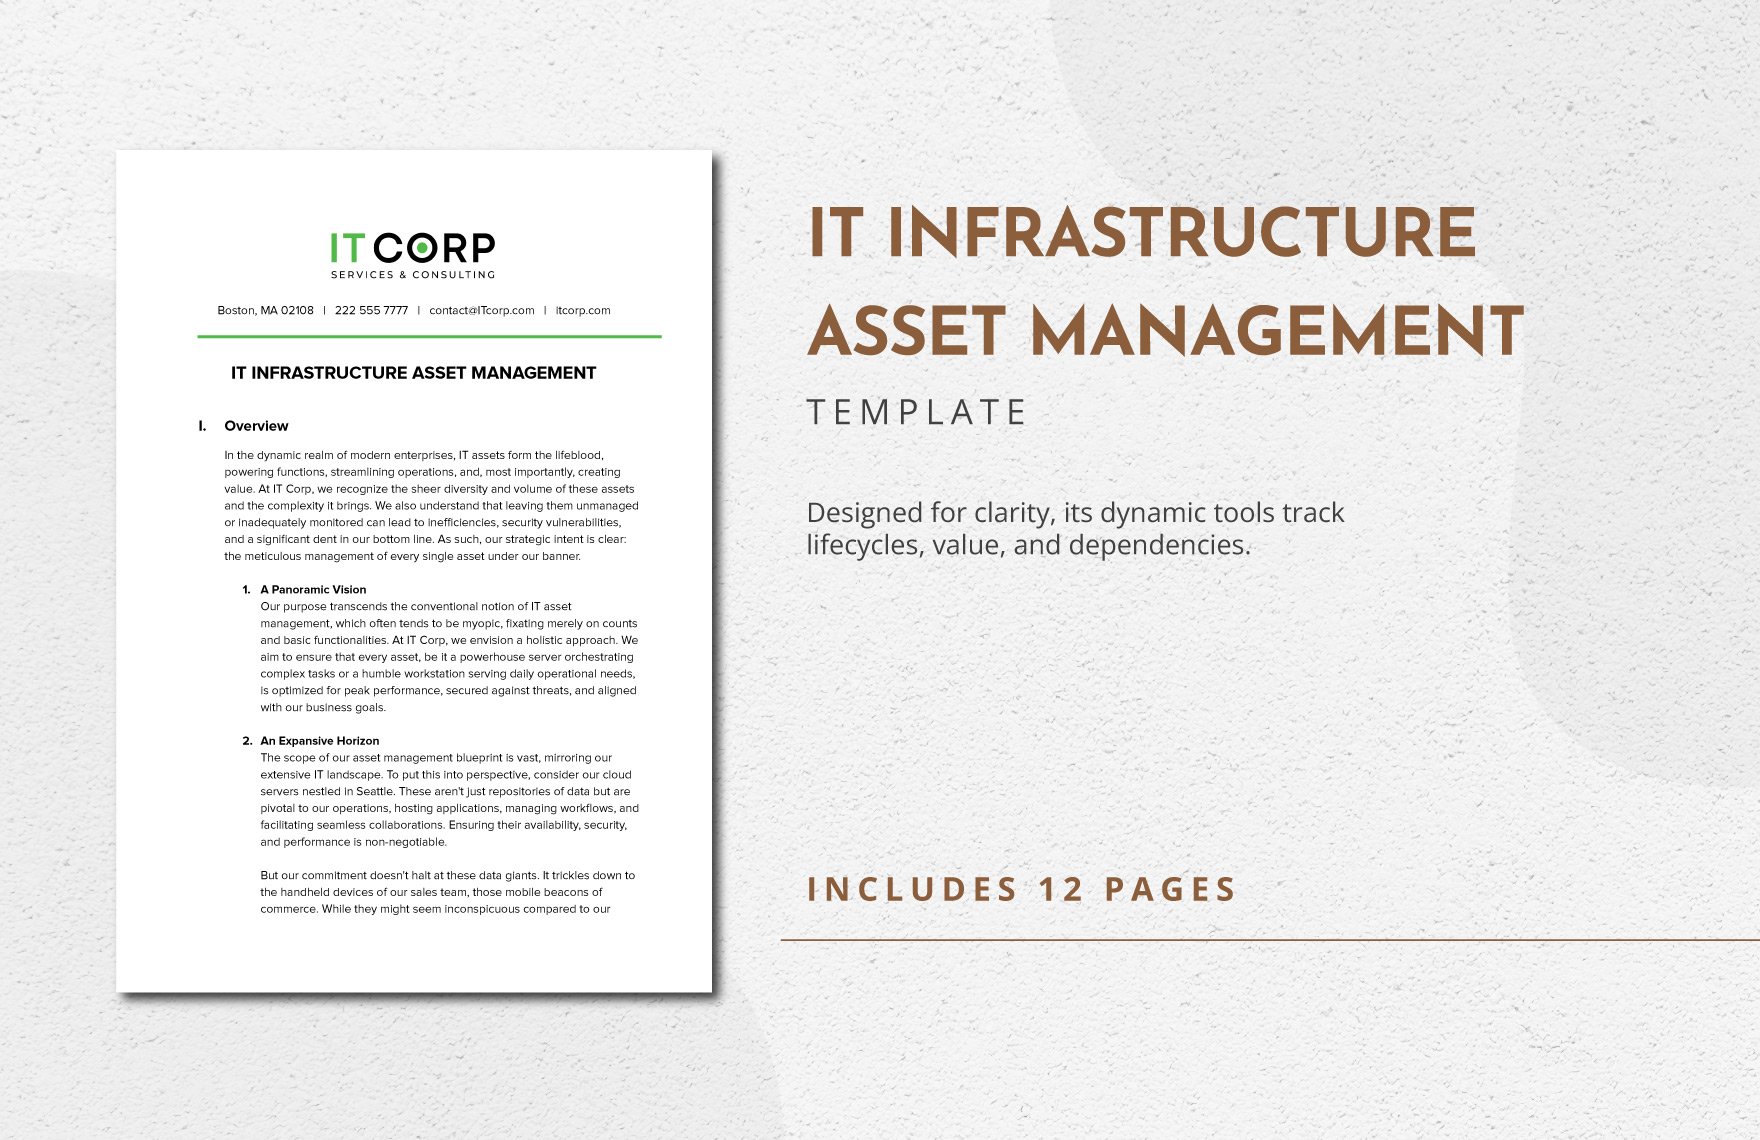 IT Infrastructure Asset Management Template